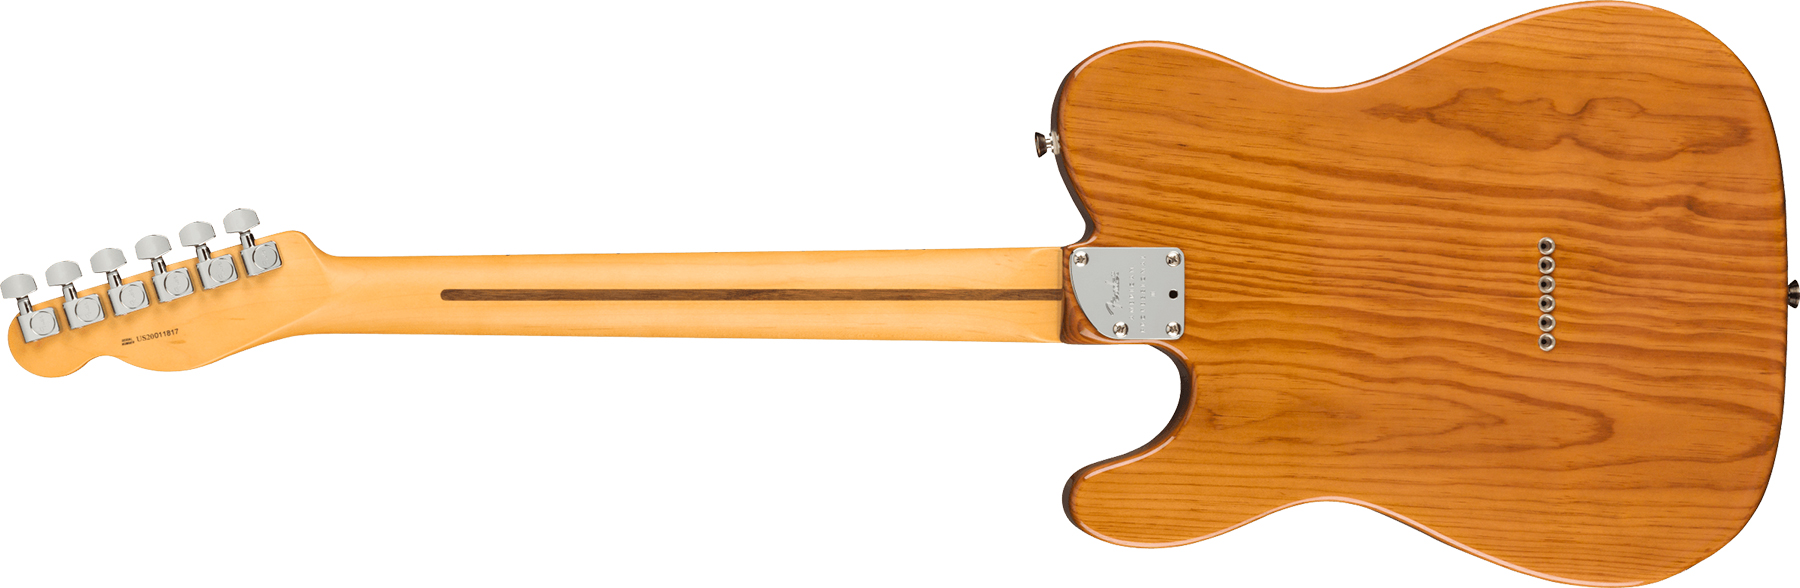 Fender Tele American Professional Ii Usa Mn - Roasted Pine - E-Gitarre in Teleform - Variation 1